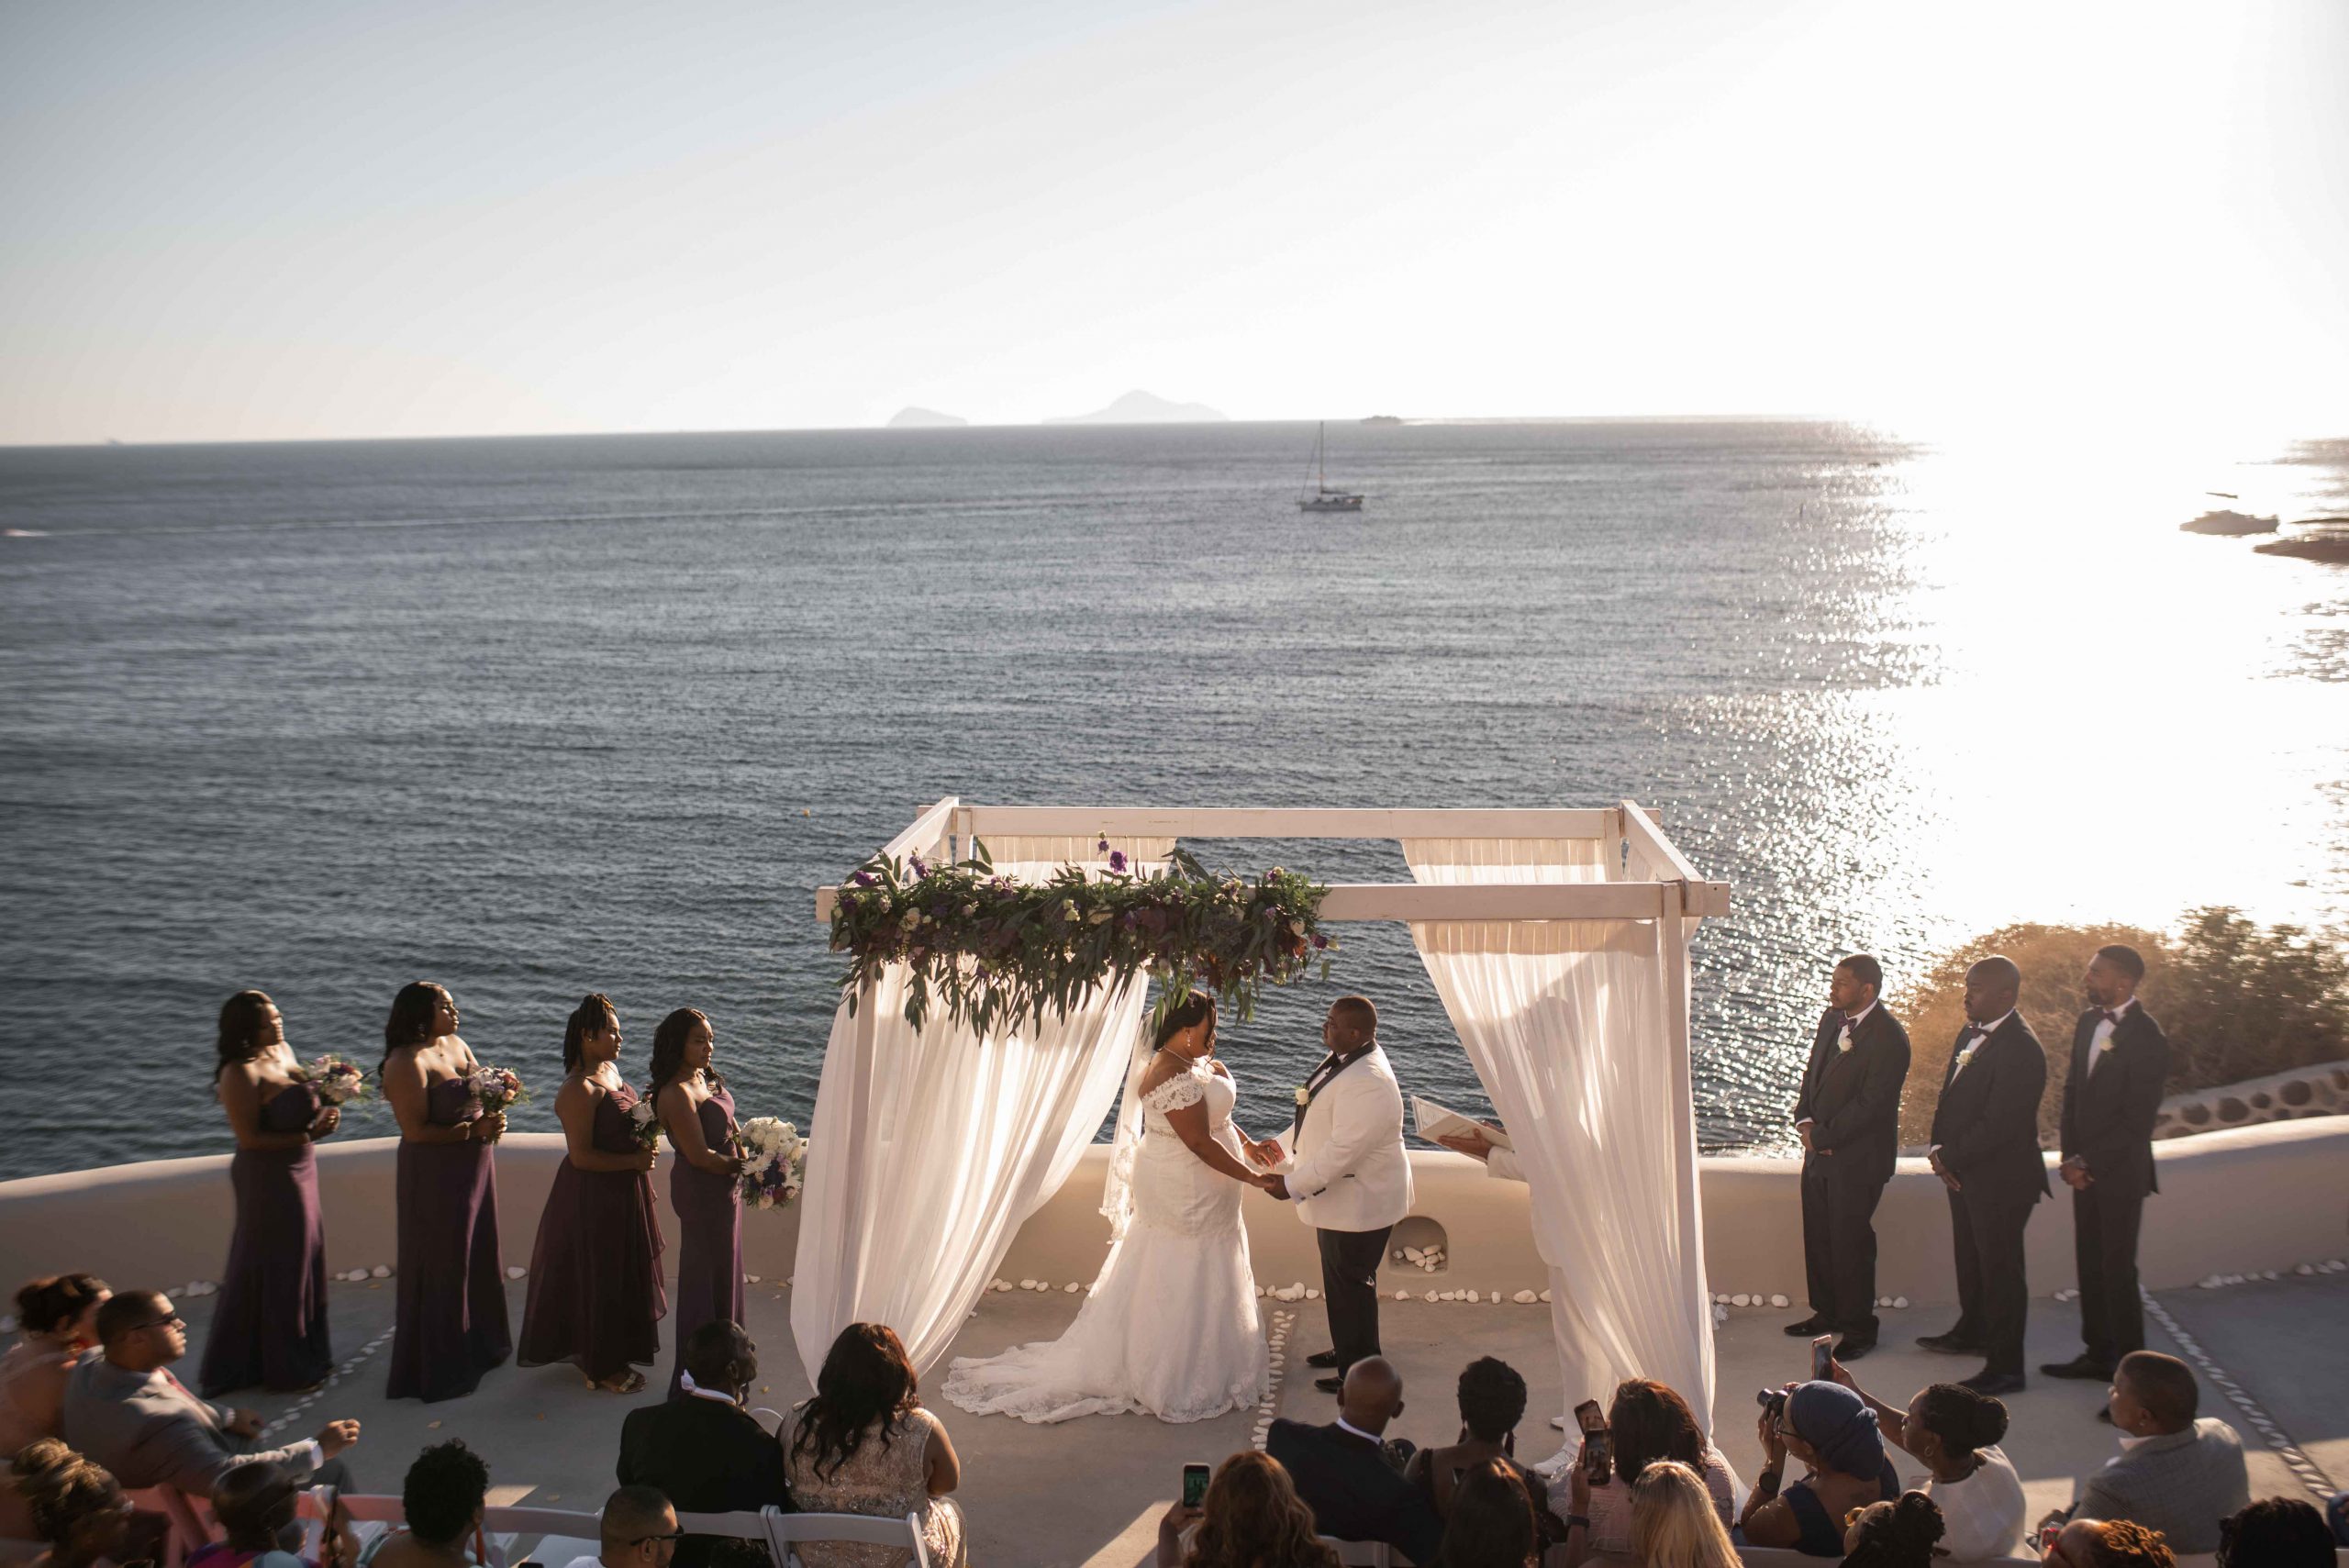 SantoriniMyWedding | akro beach wedding package